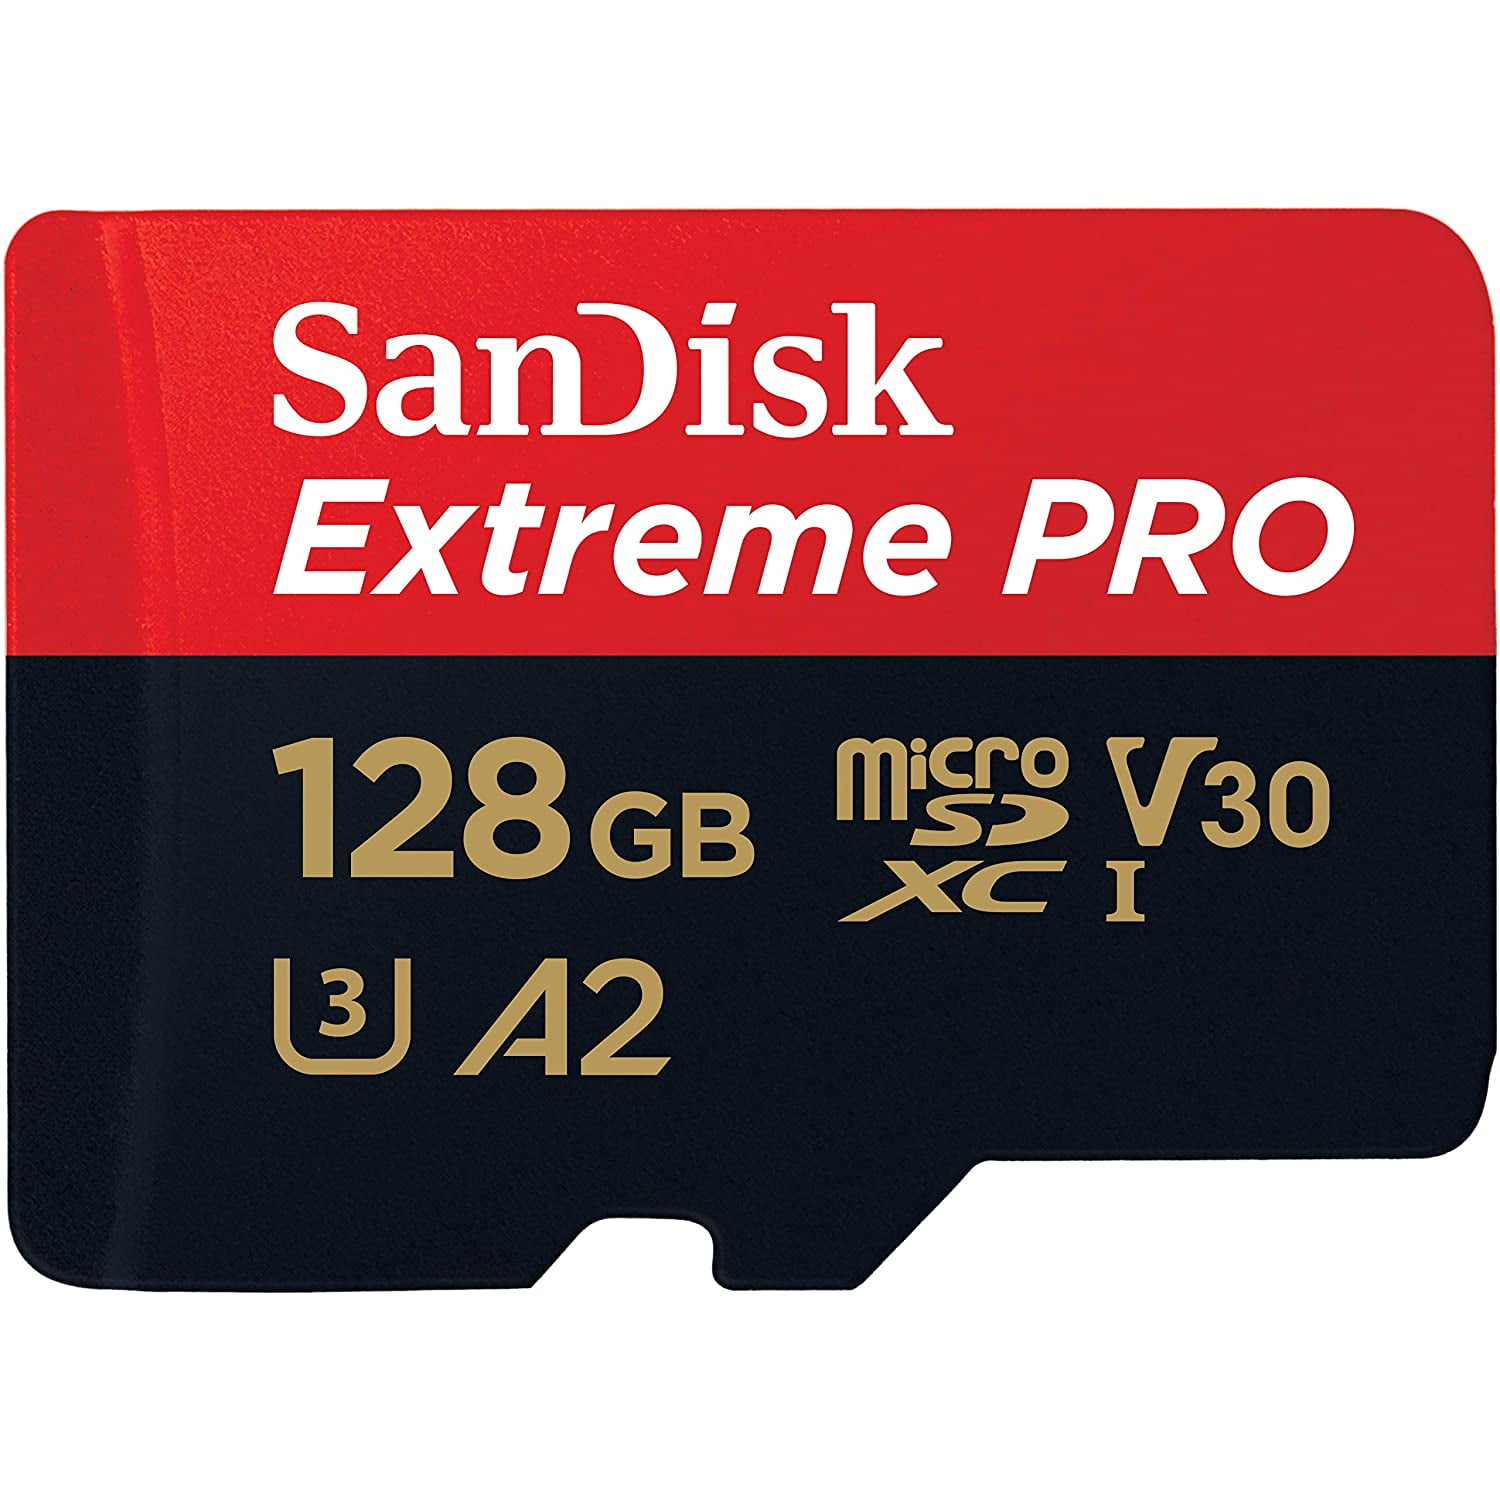 Sandisk - Microsdxc - 64 Go - SDXC - Original - Carte mémoire